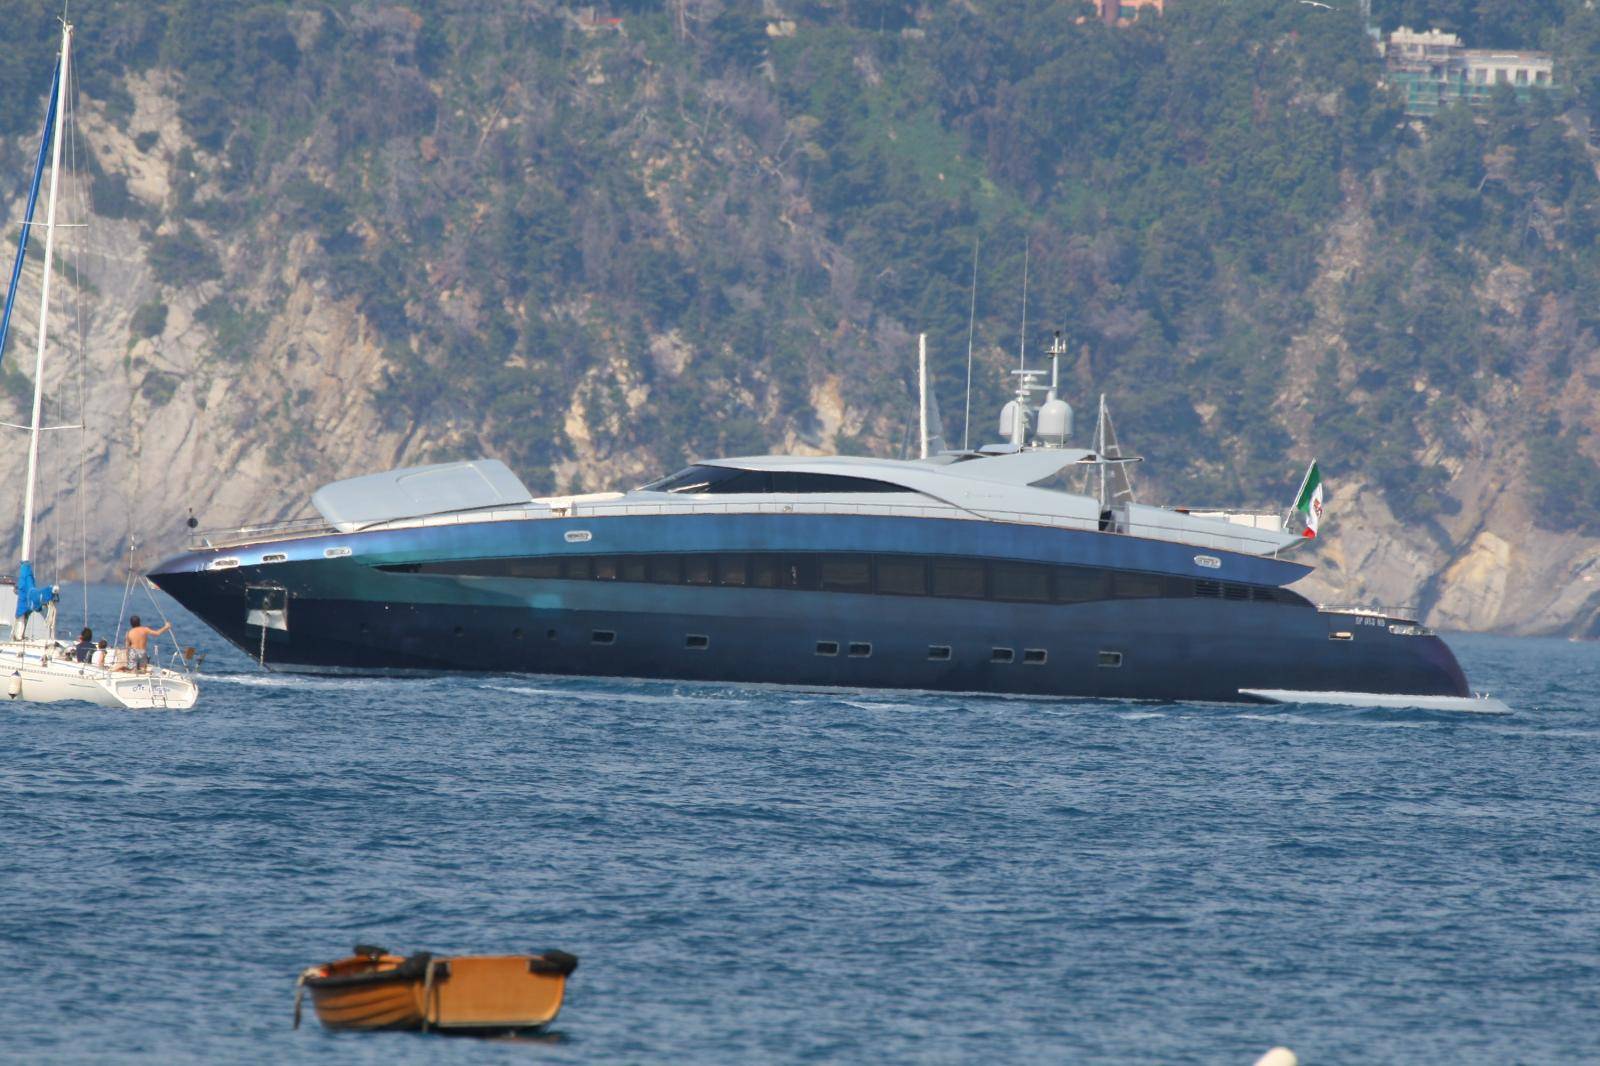 Roberto Cavalli on his yacht in Portofino, Liguria, Italy